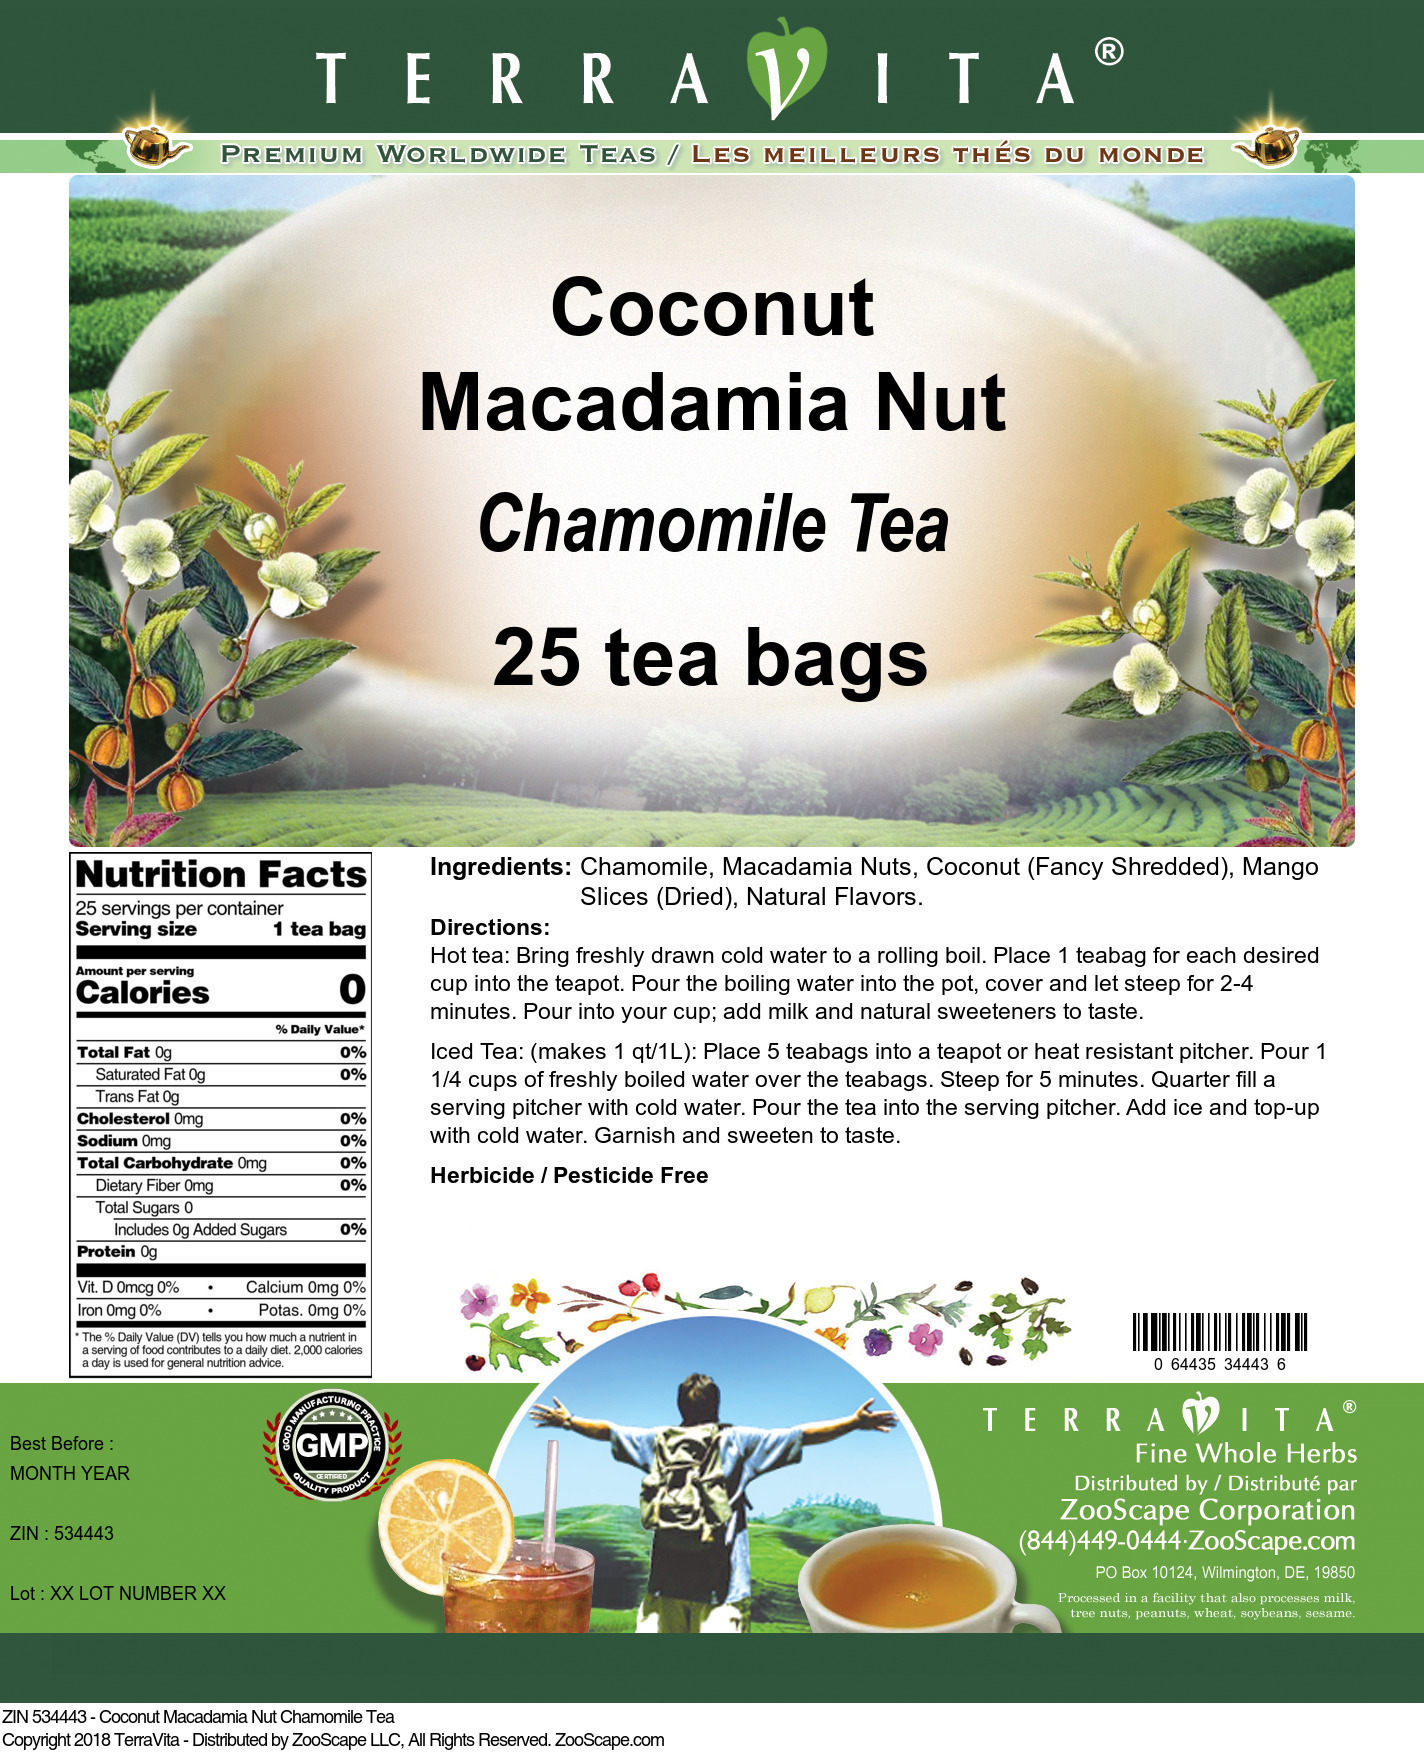 Coconut Macadamia Nut Chamomile Tea - Label